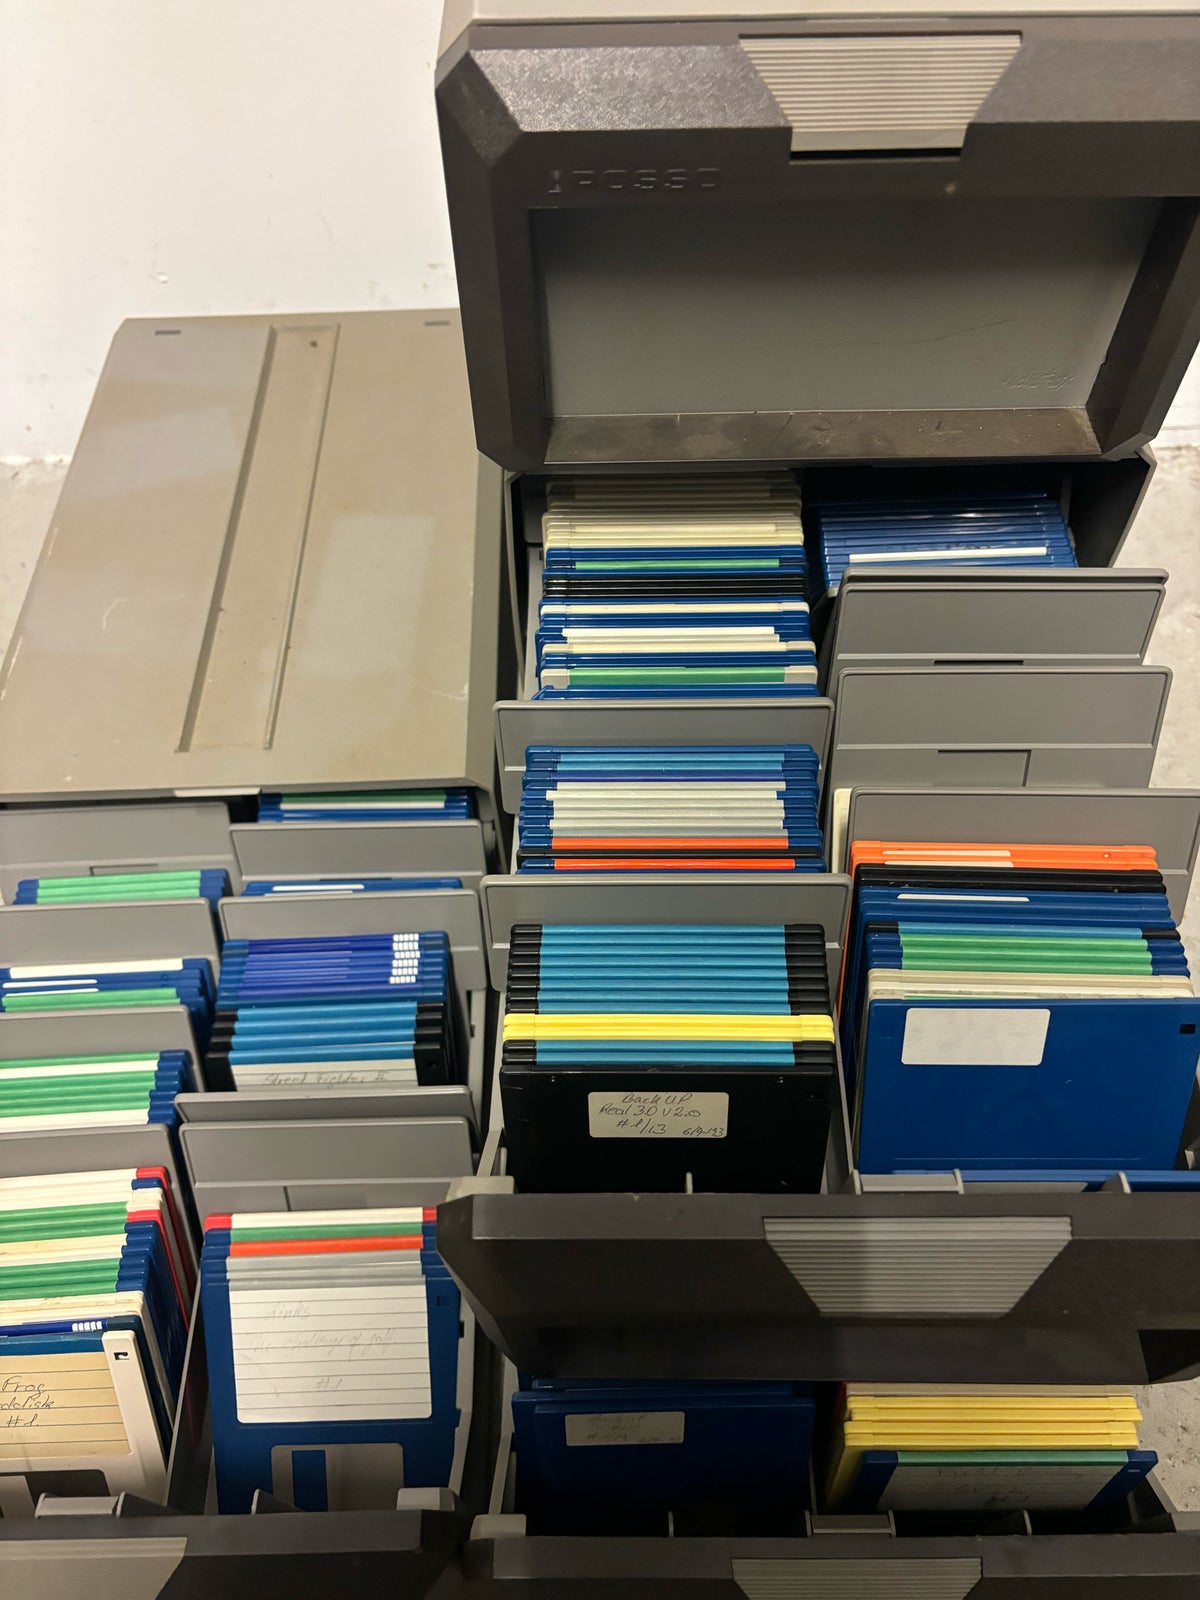 Store Diskbokse med Amiga 500 disketter, spillekonsol